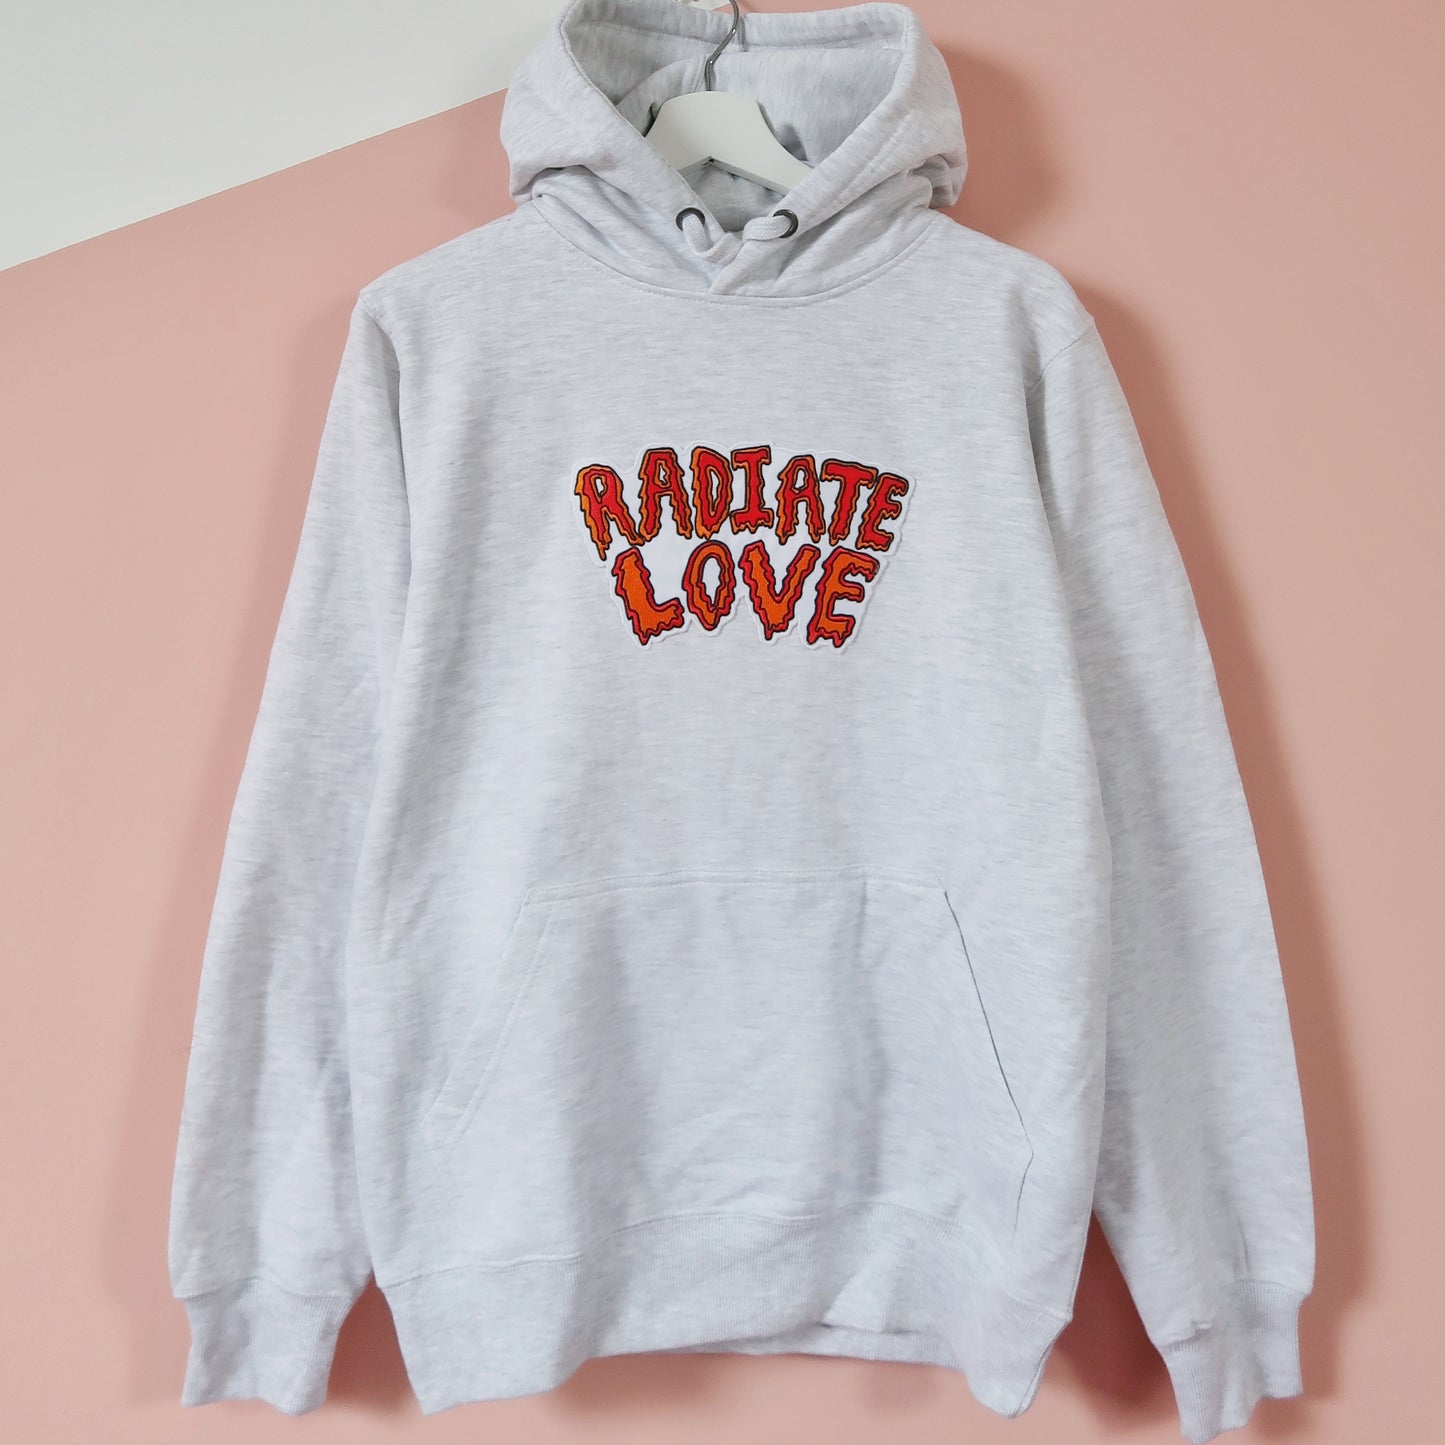 radiate love embroidered hoodie - light grey